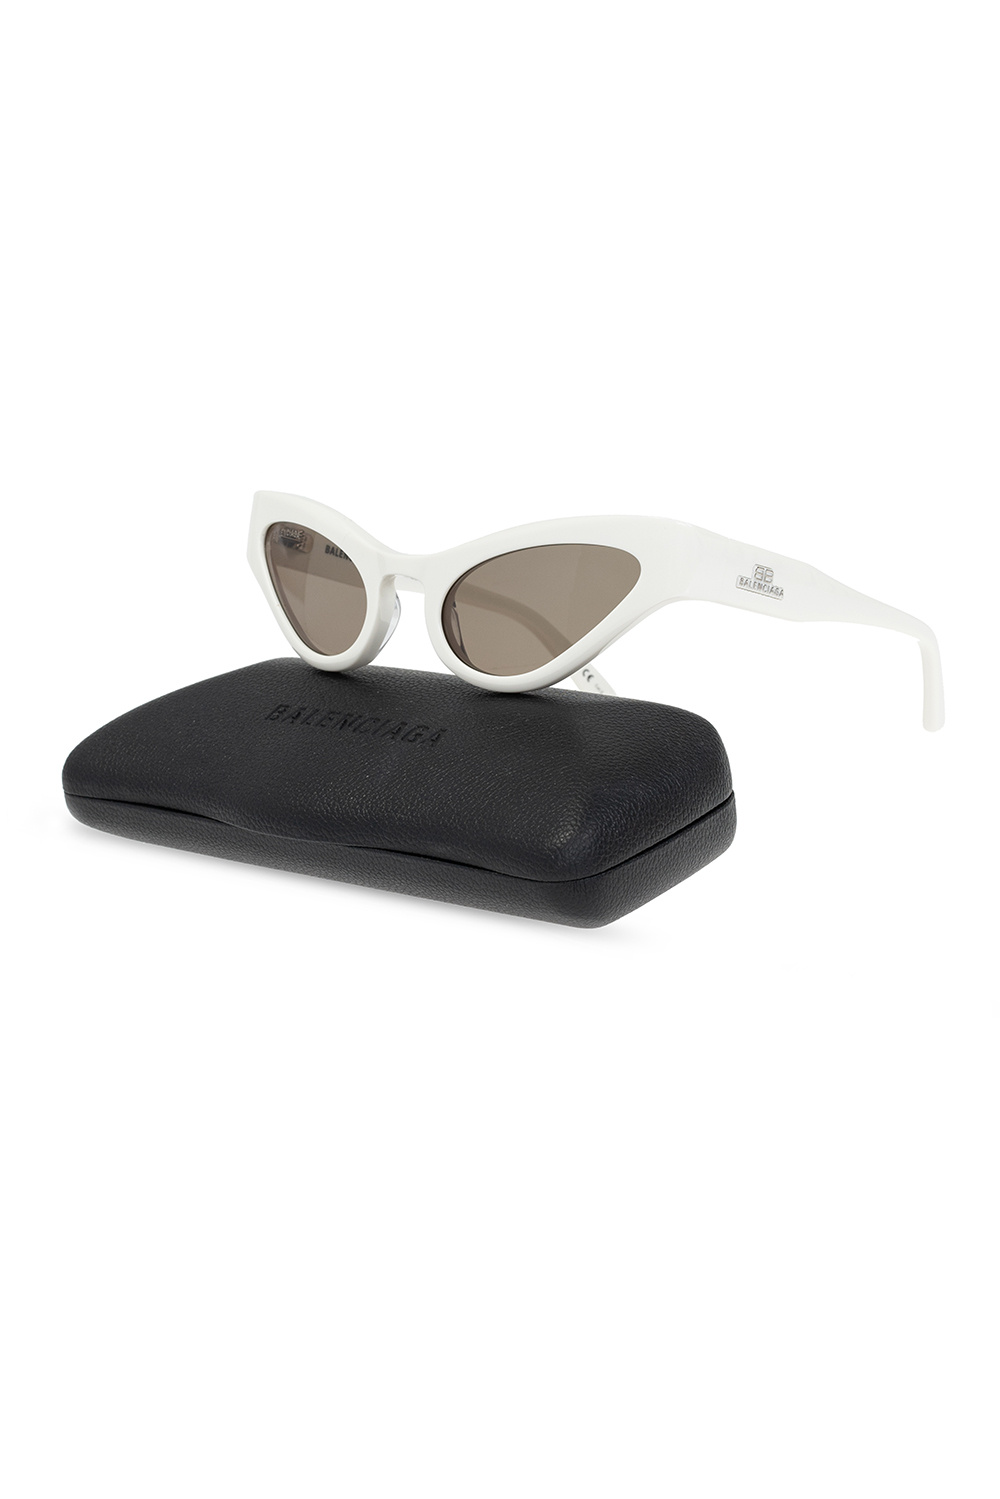 Balenciaga double-bridge rectangle-frame sunglasses